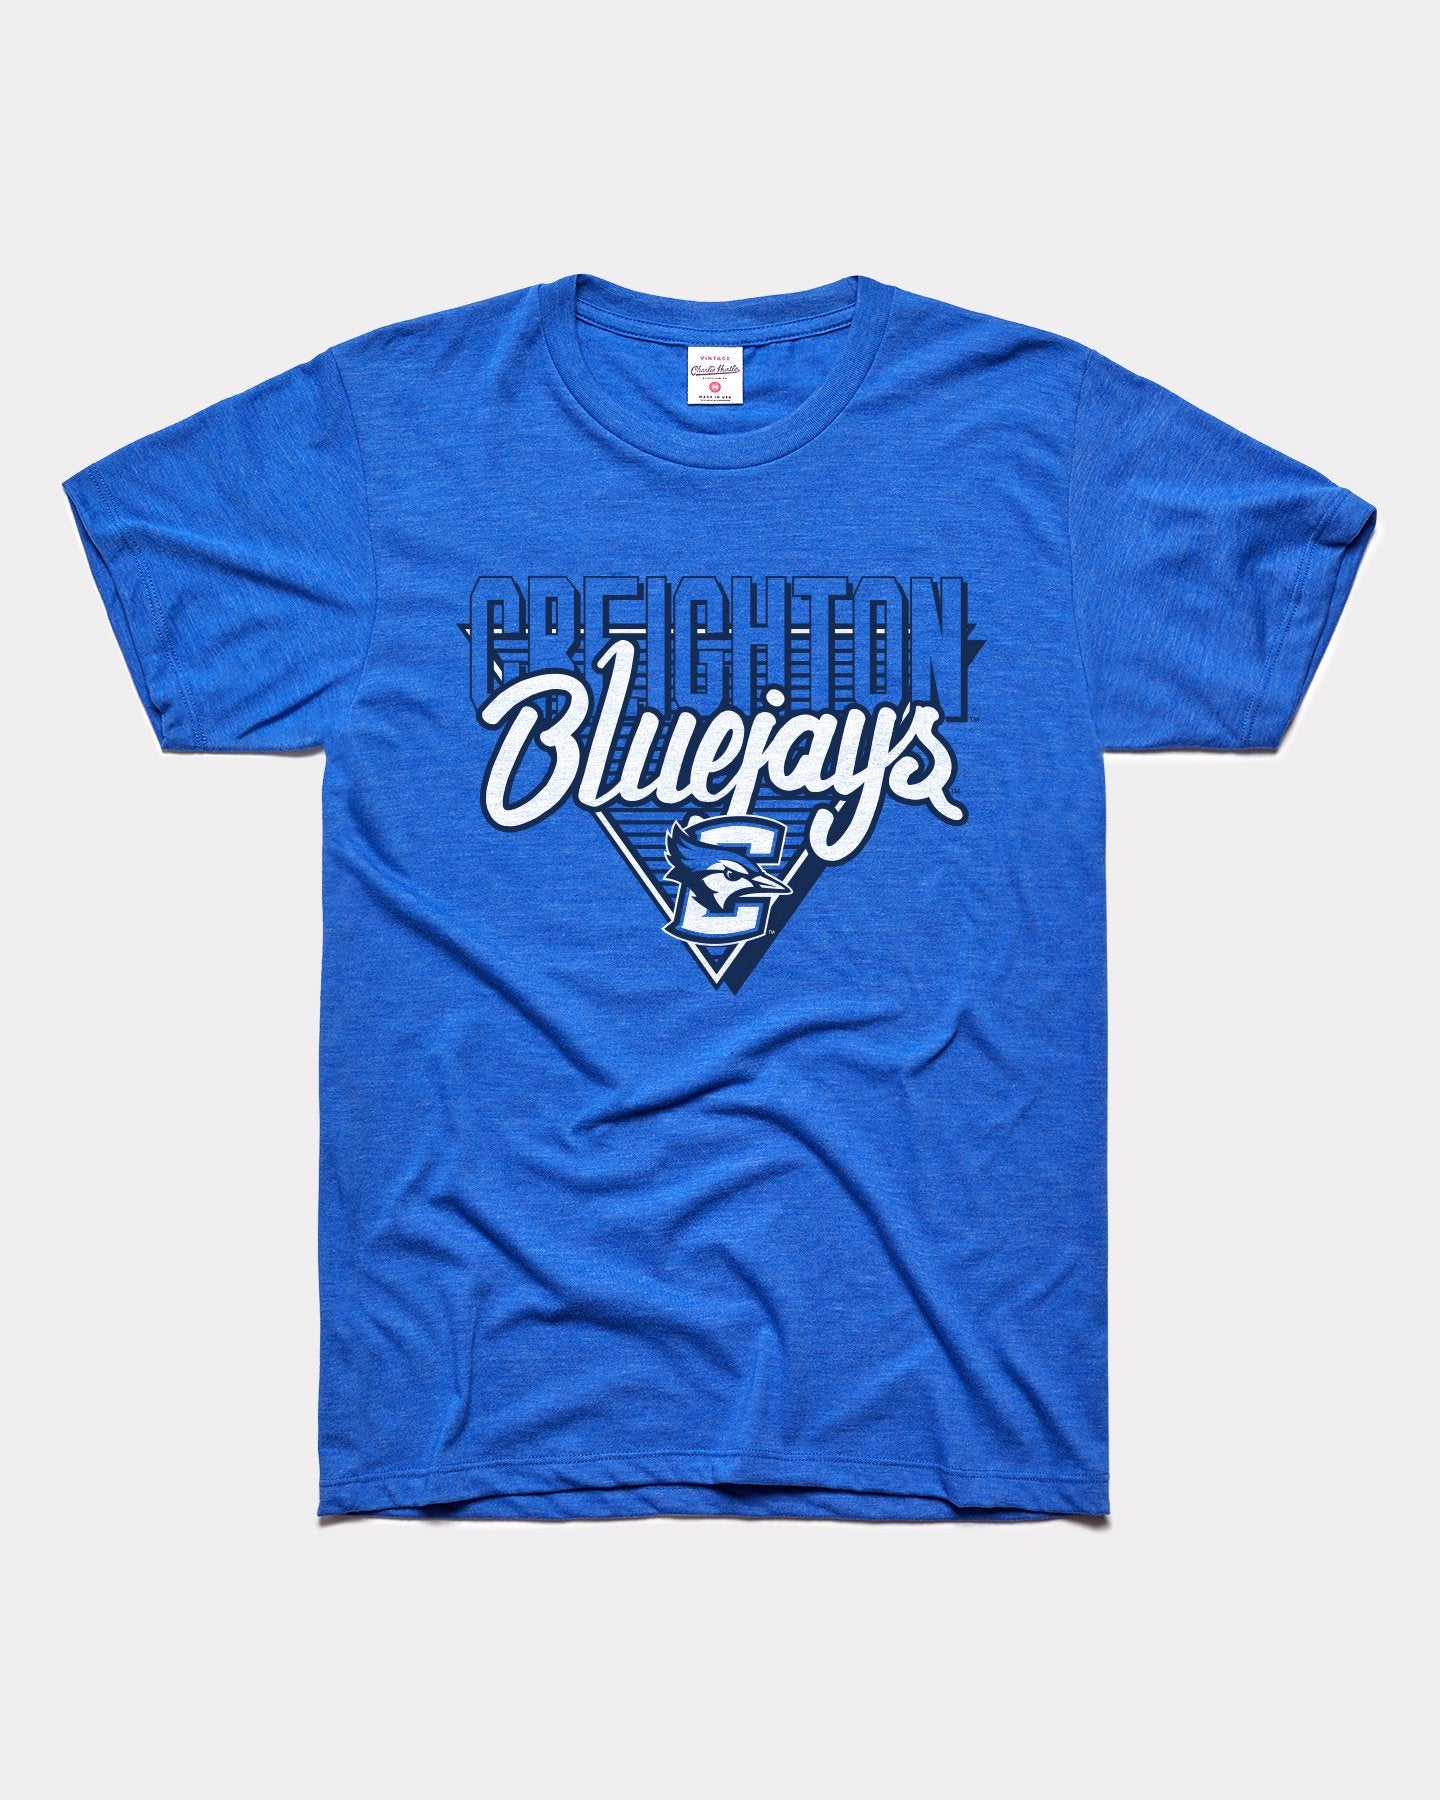 Creighton Bluejays Royal Blue 90s Throwback T-Shirt